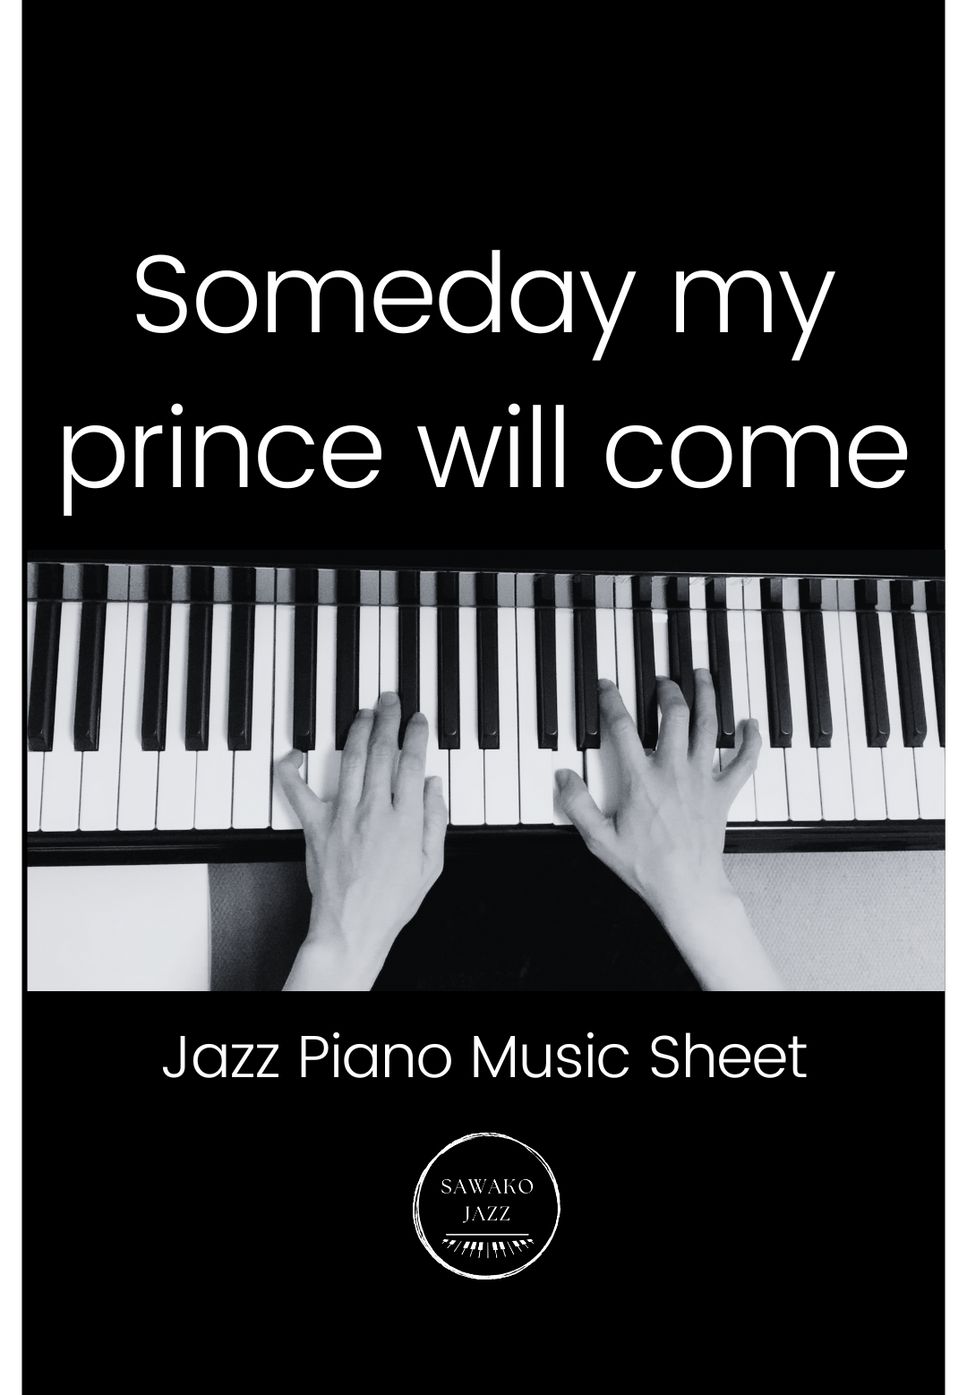 Frank Churchill - Someday my prince will come (piano solo / jazz) by Sawako Hyodo